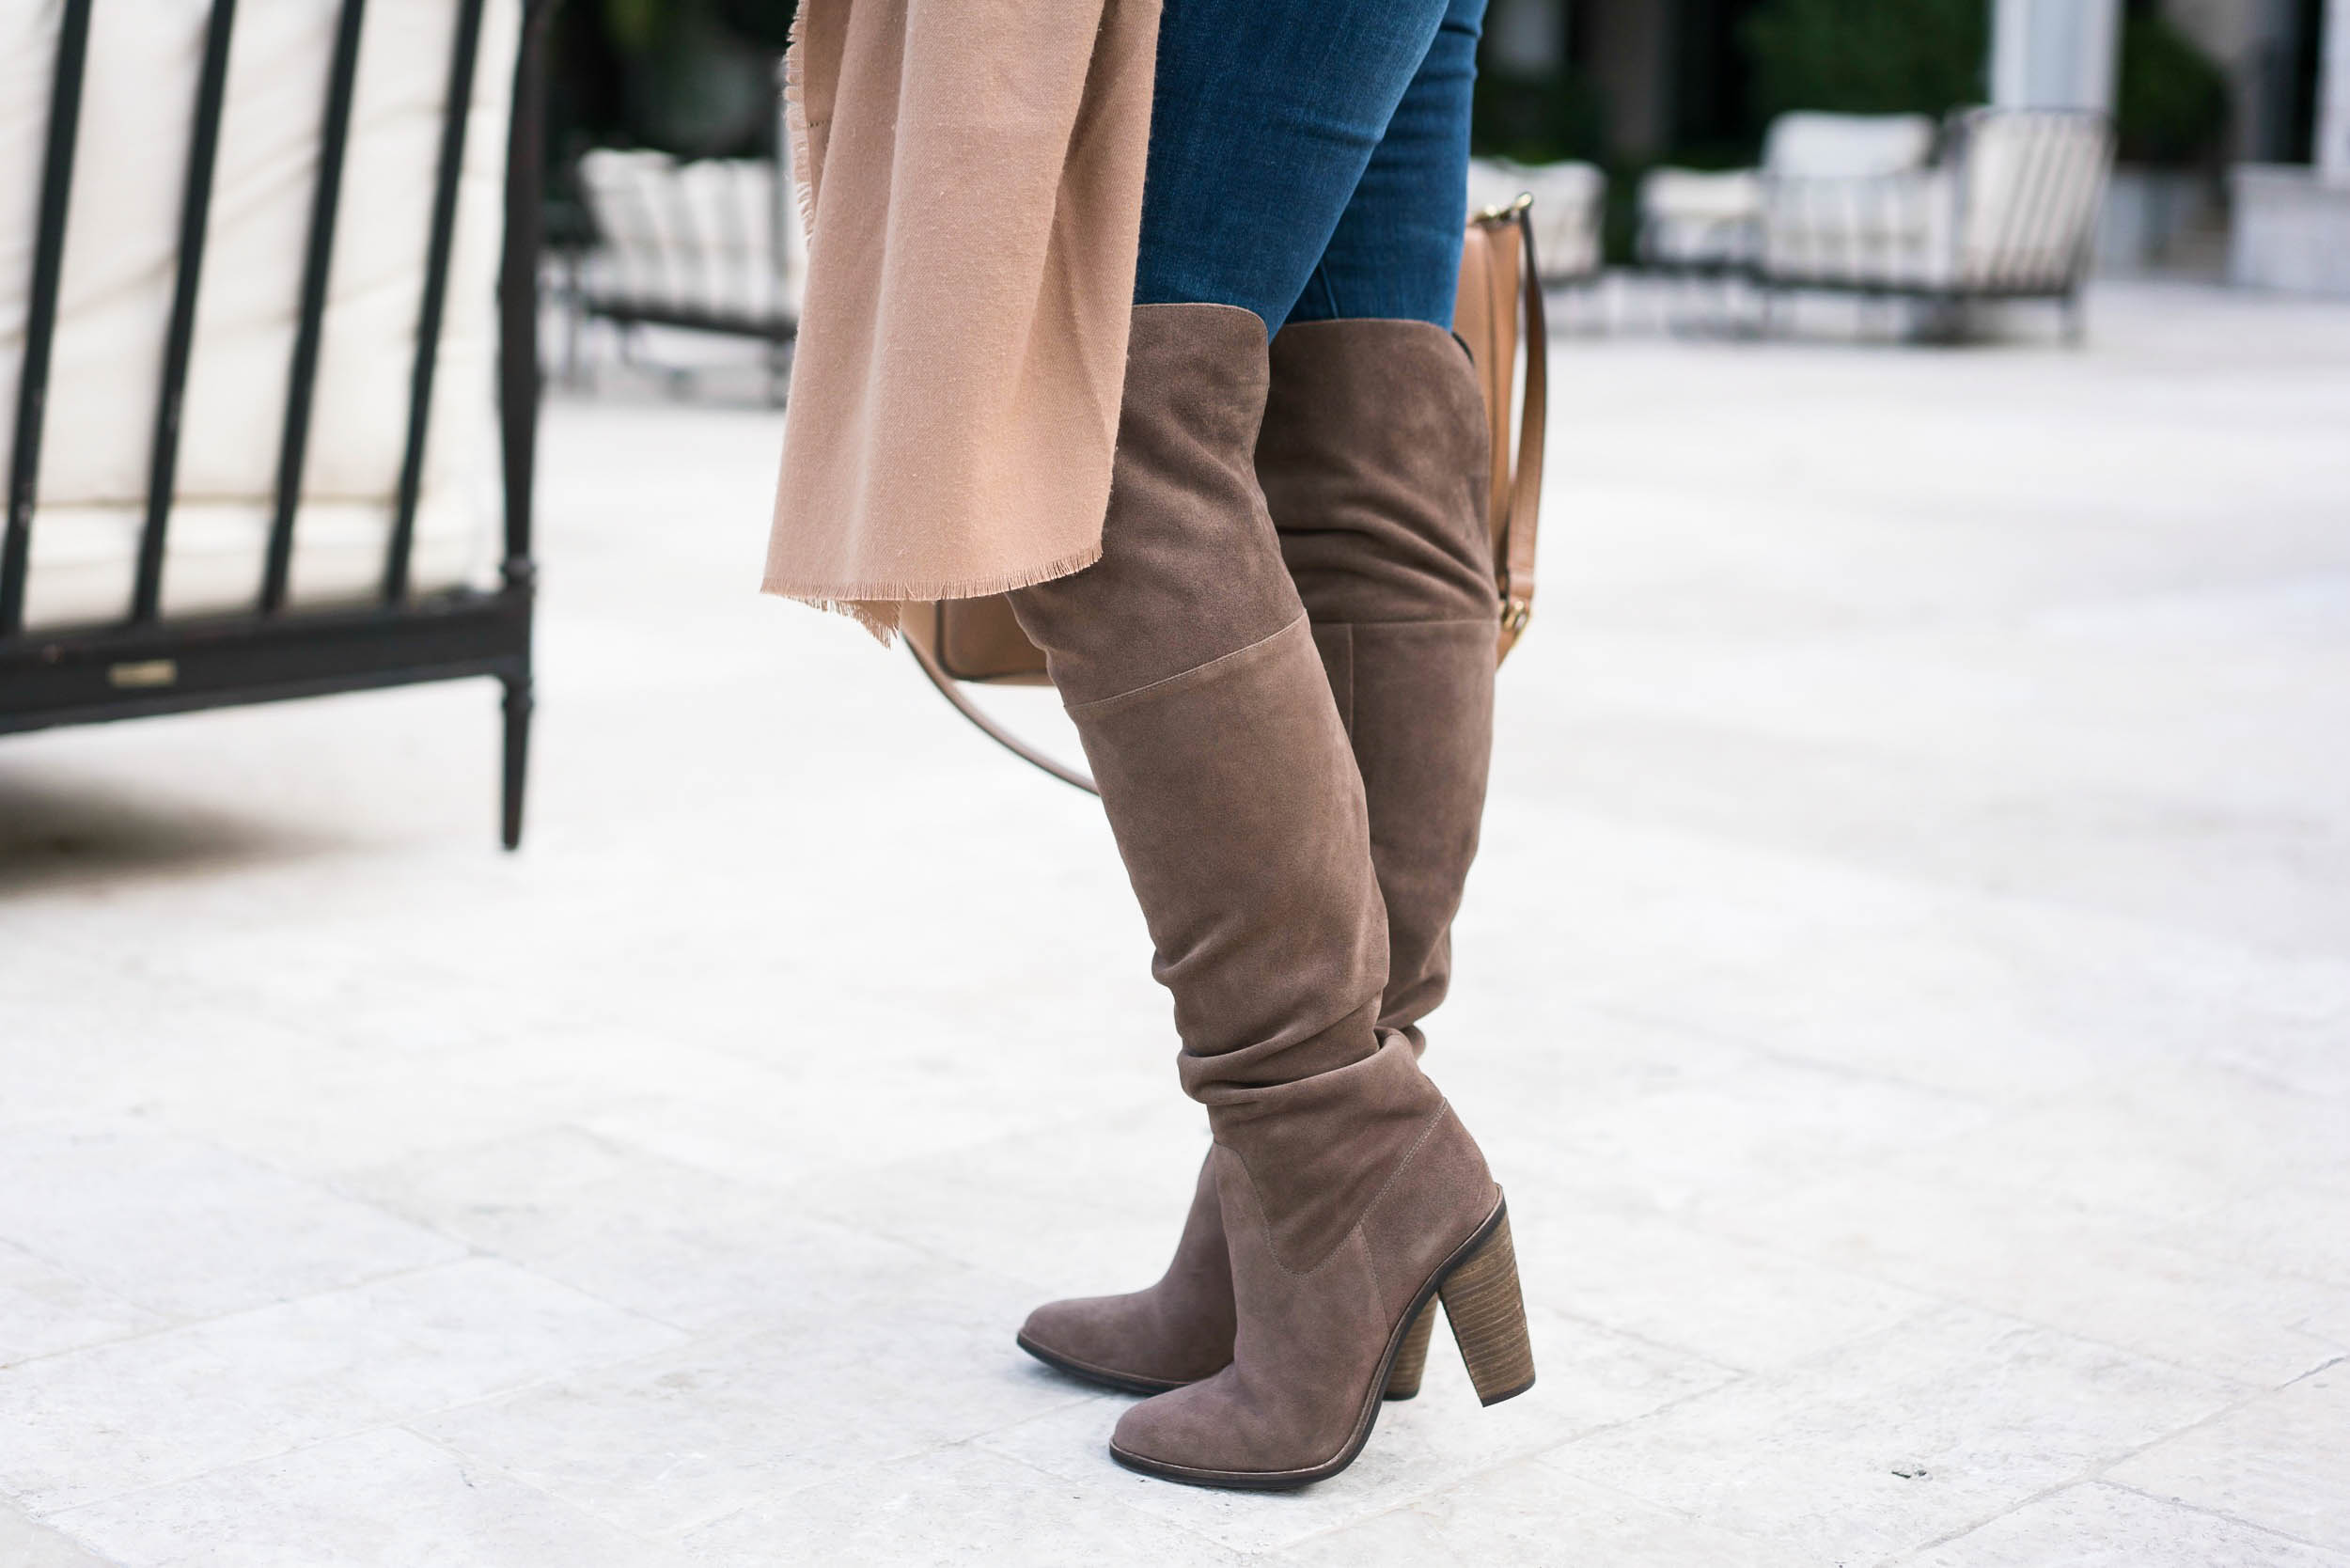 OTK Boots Neutral Looks for Winter | coffeebeansandbobbypins.com | @amy_cbandbp